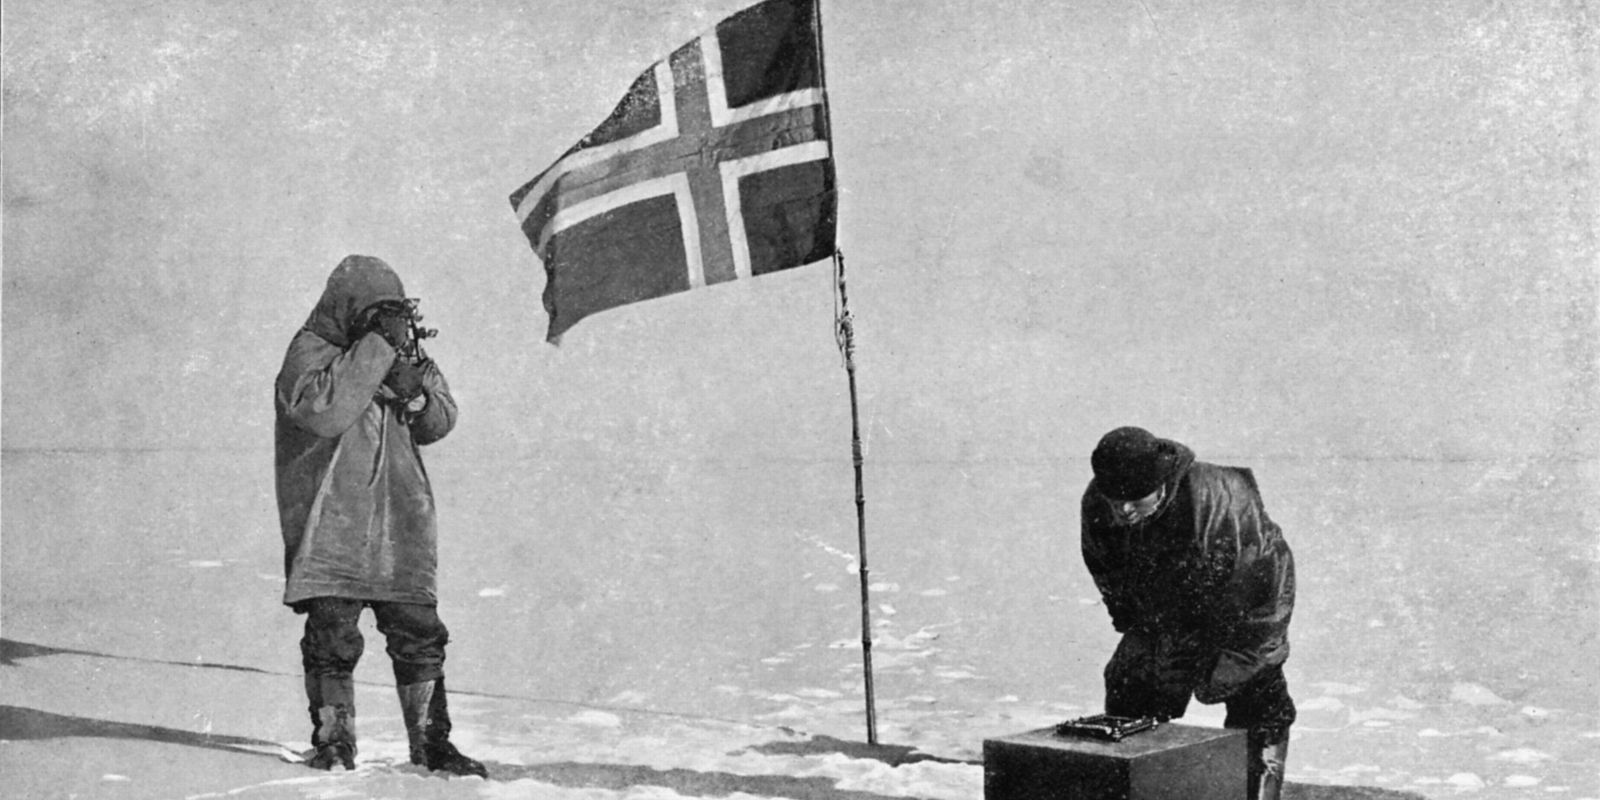 December 14th: Roald Amundsen Conquered The South Pole